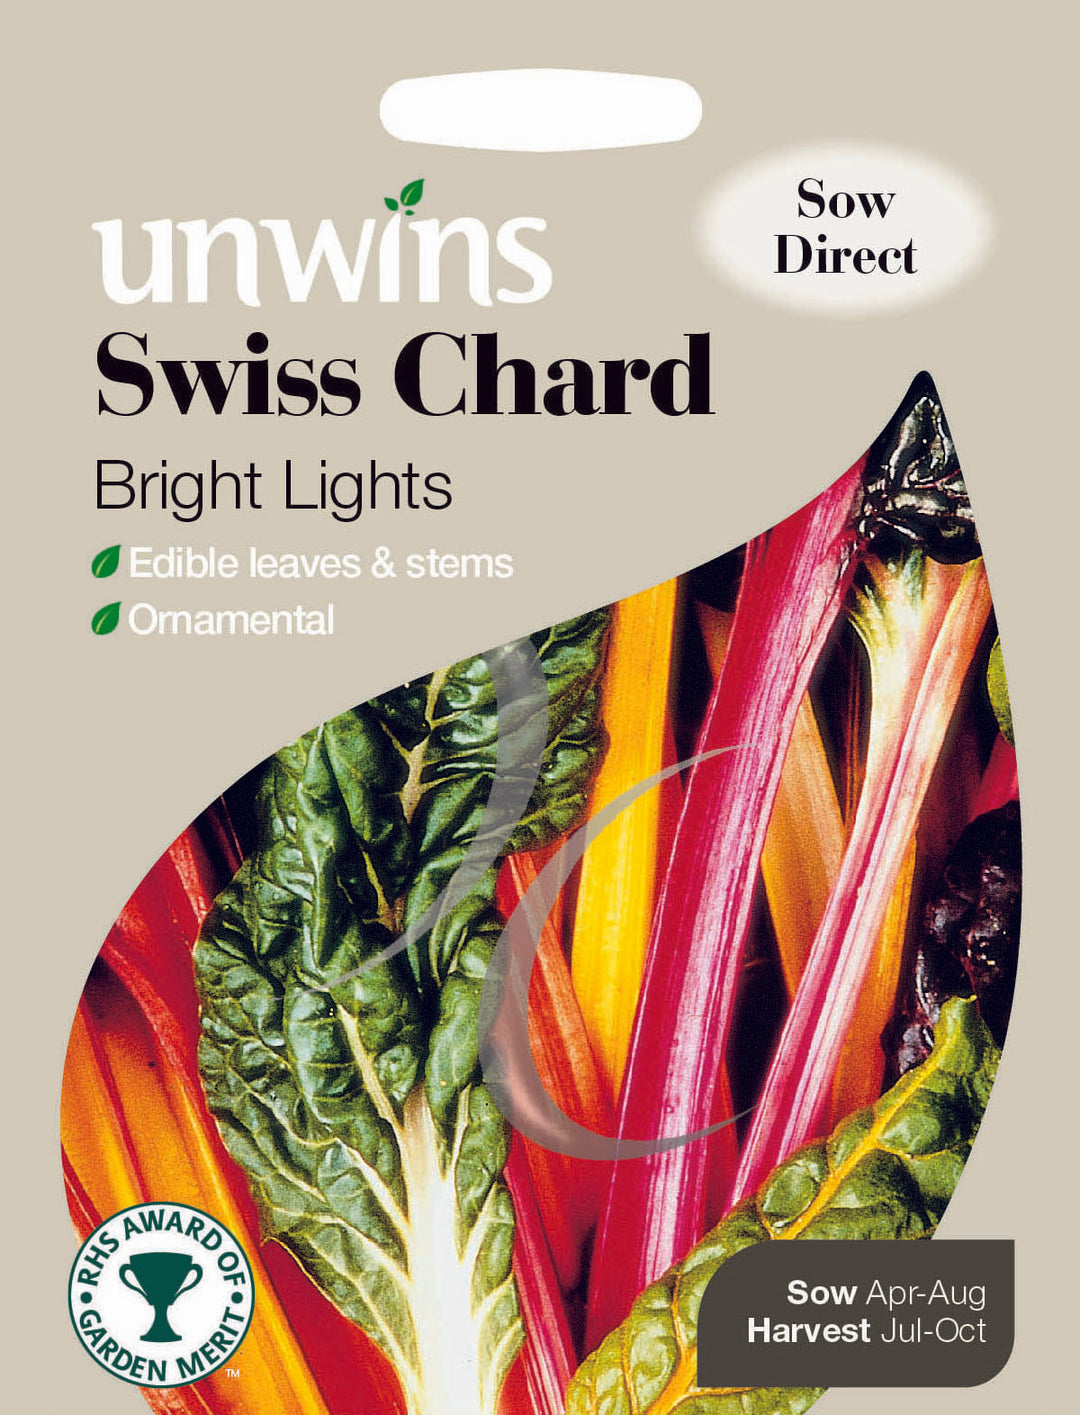 Swiss Chard Bright Lights